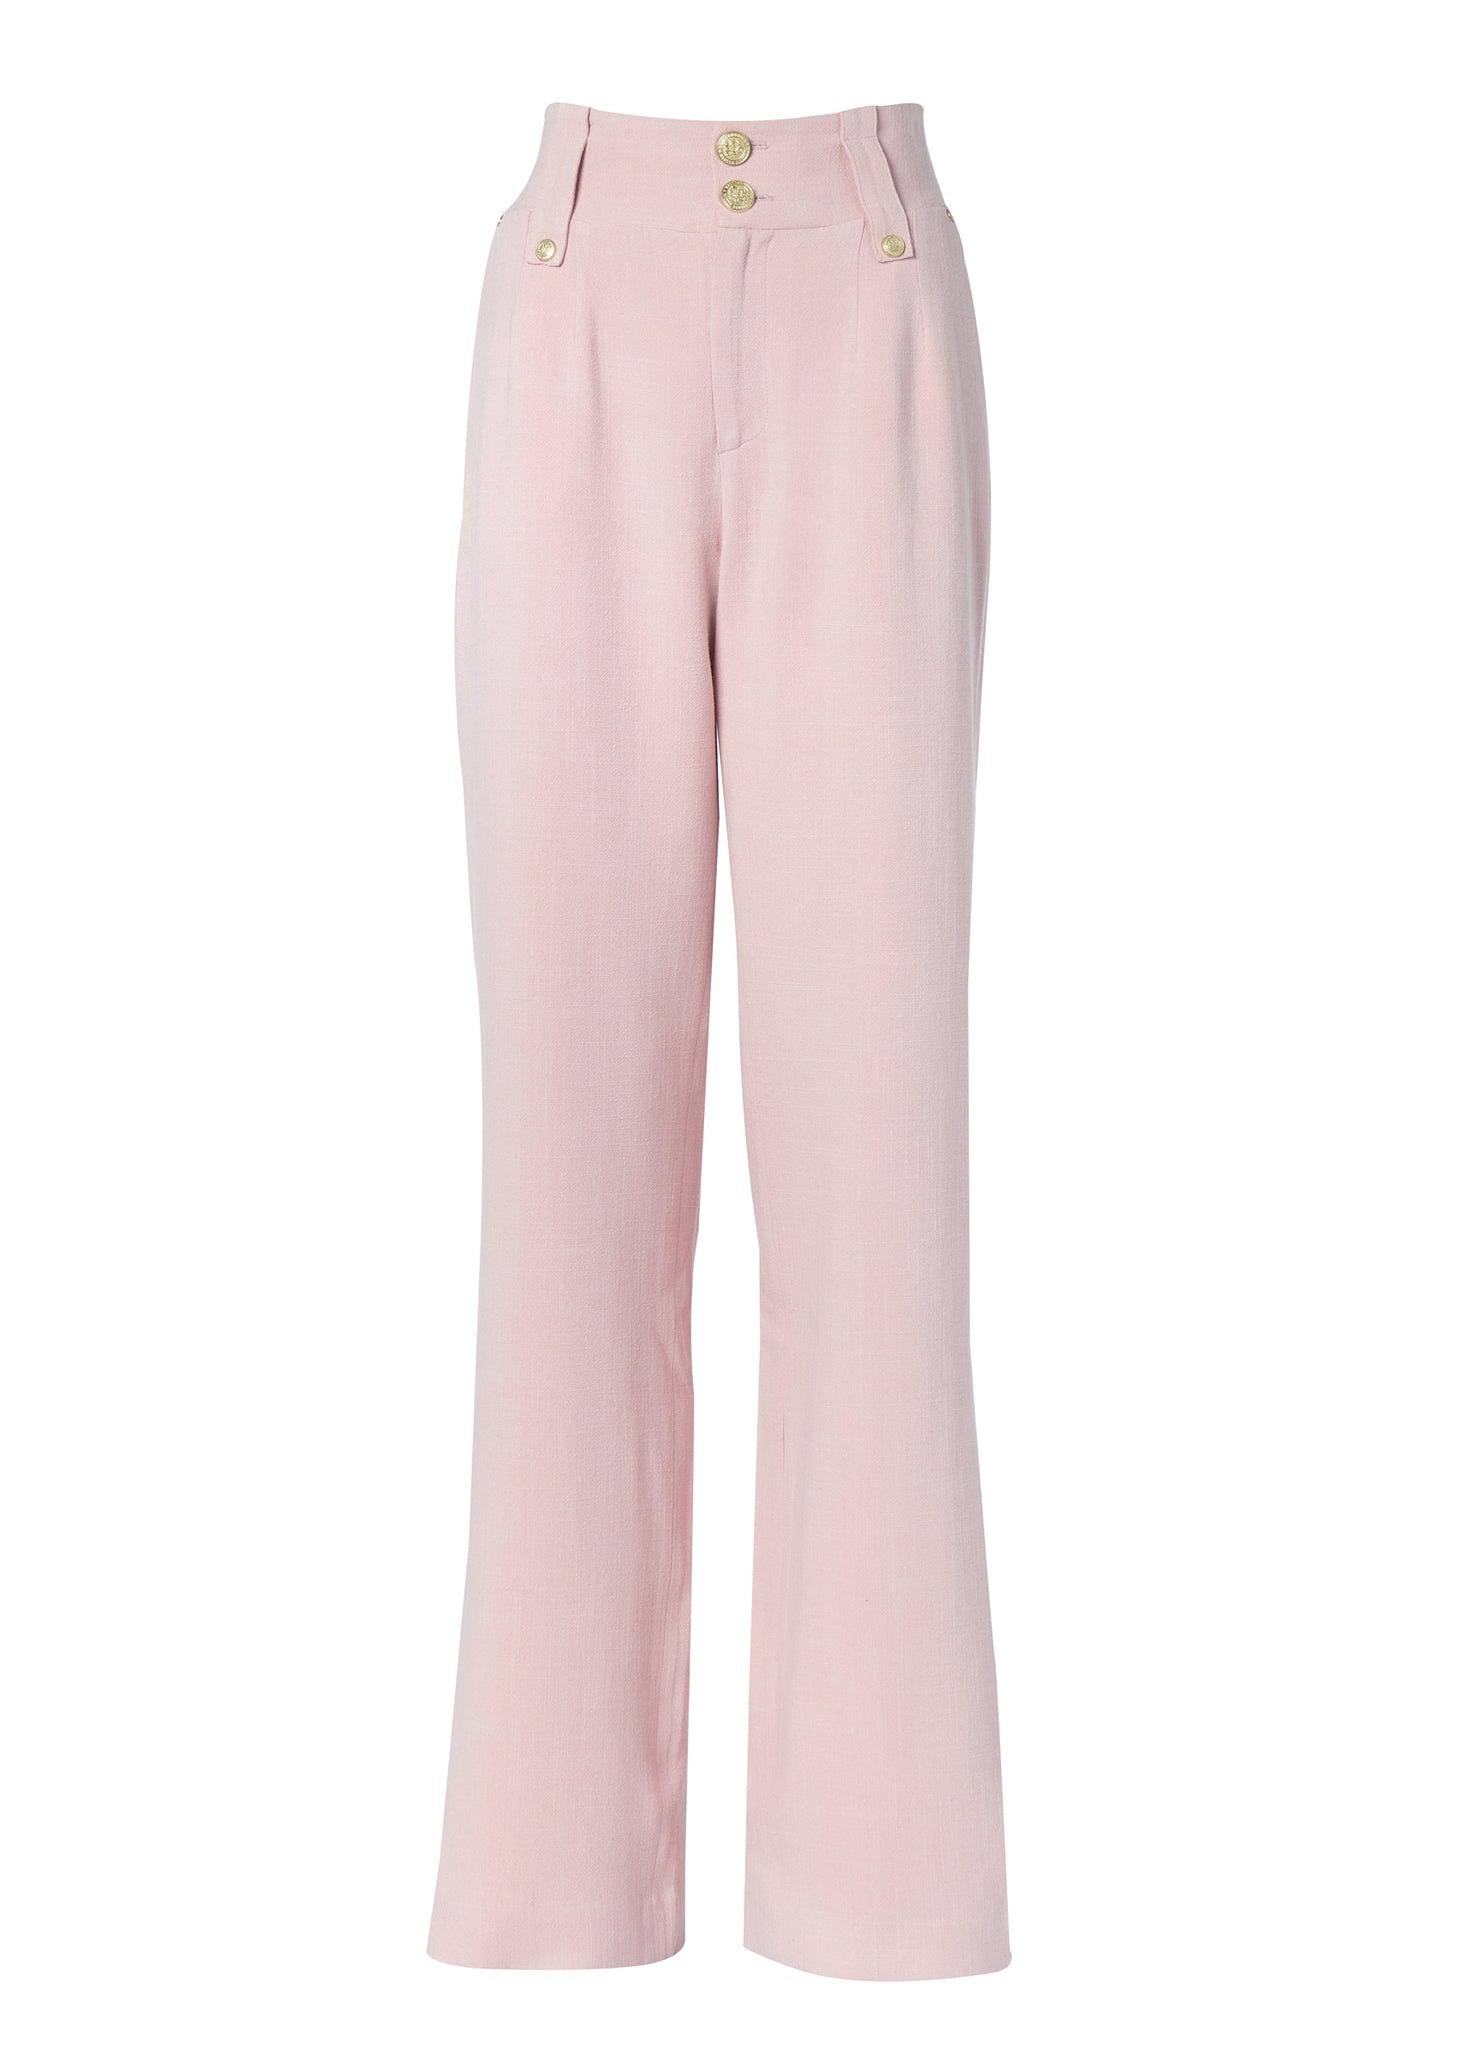 The Pink Linen Suit